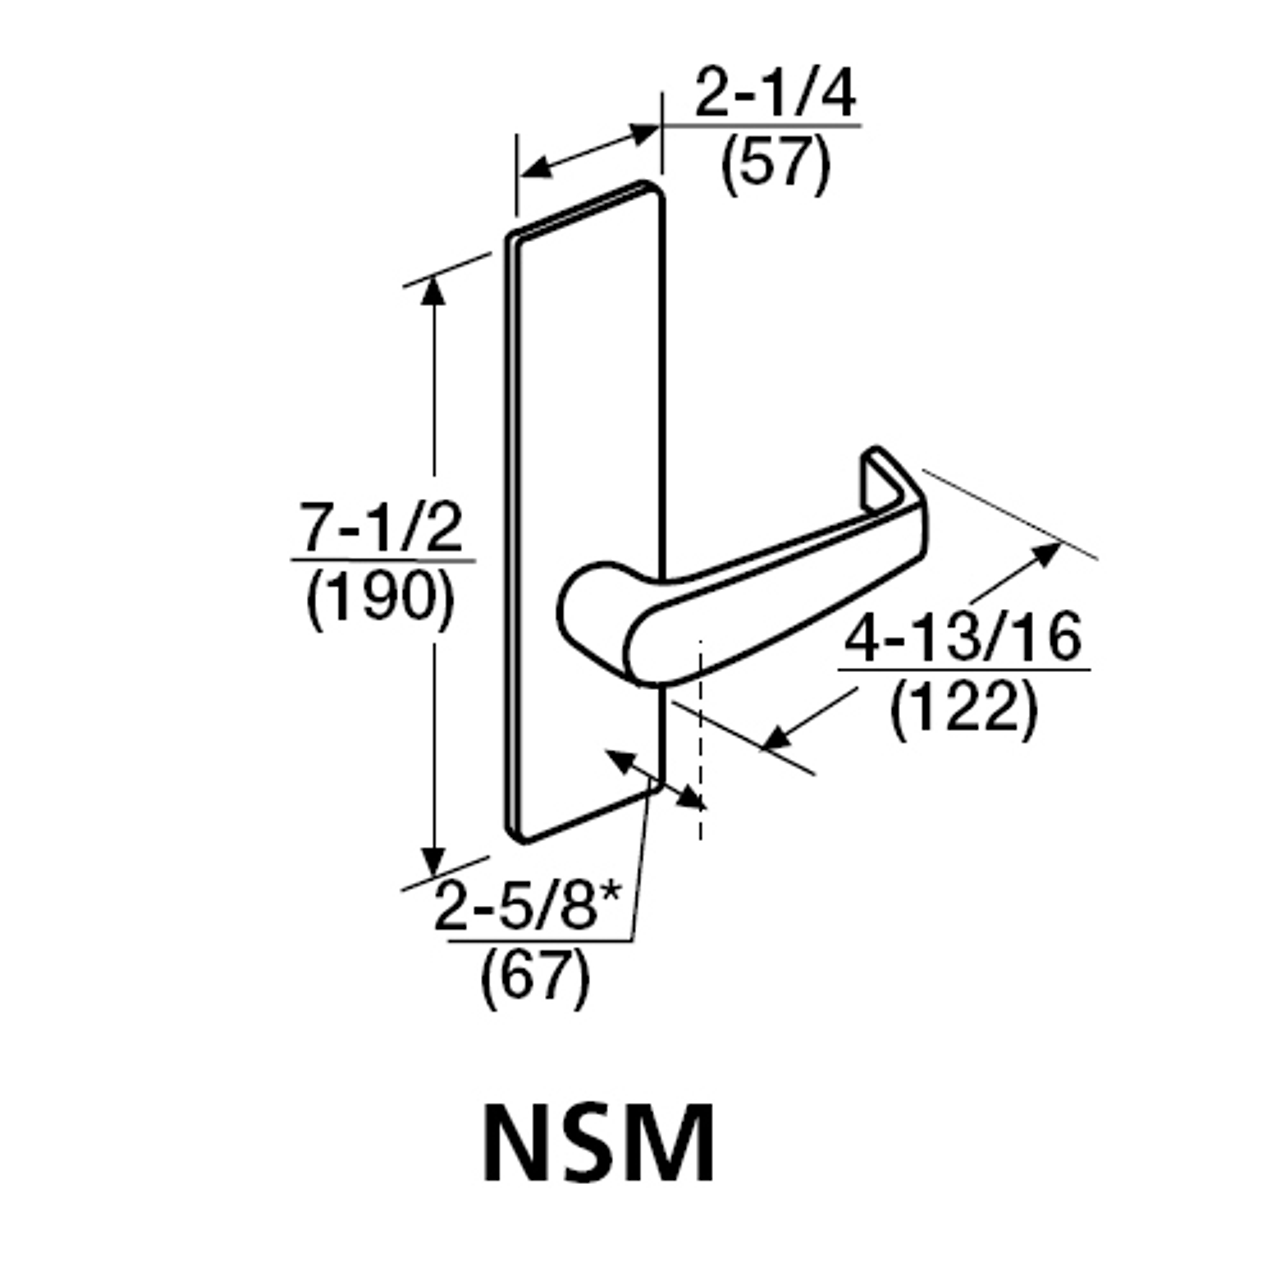 ML2055-NSM-619-CL6 Corbin Russwin ML2000 Series IC 6-Pin Less Core Mortise Classroom Locksets with Newport Lever in Satin Nickel